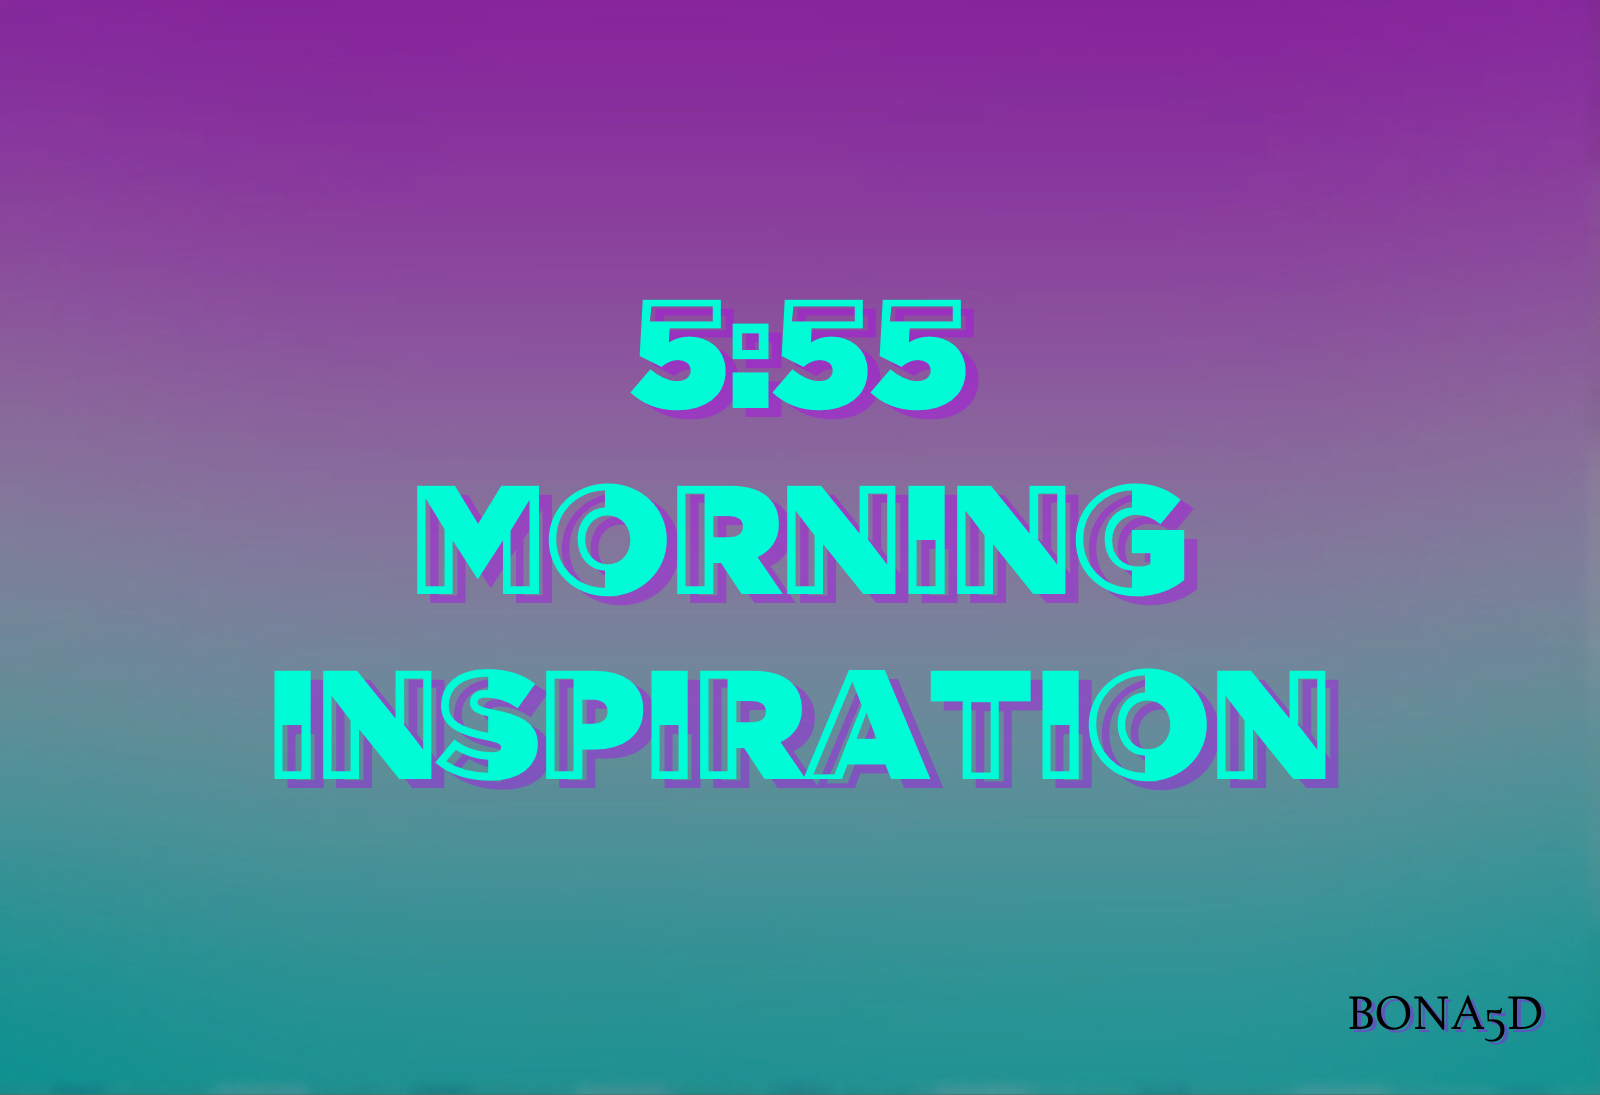 03-04-20 morning inspiration